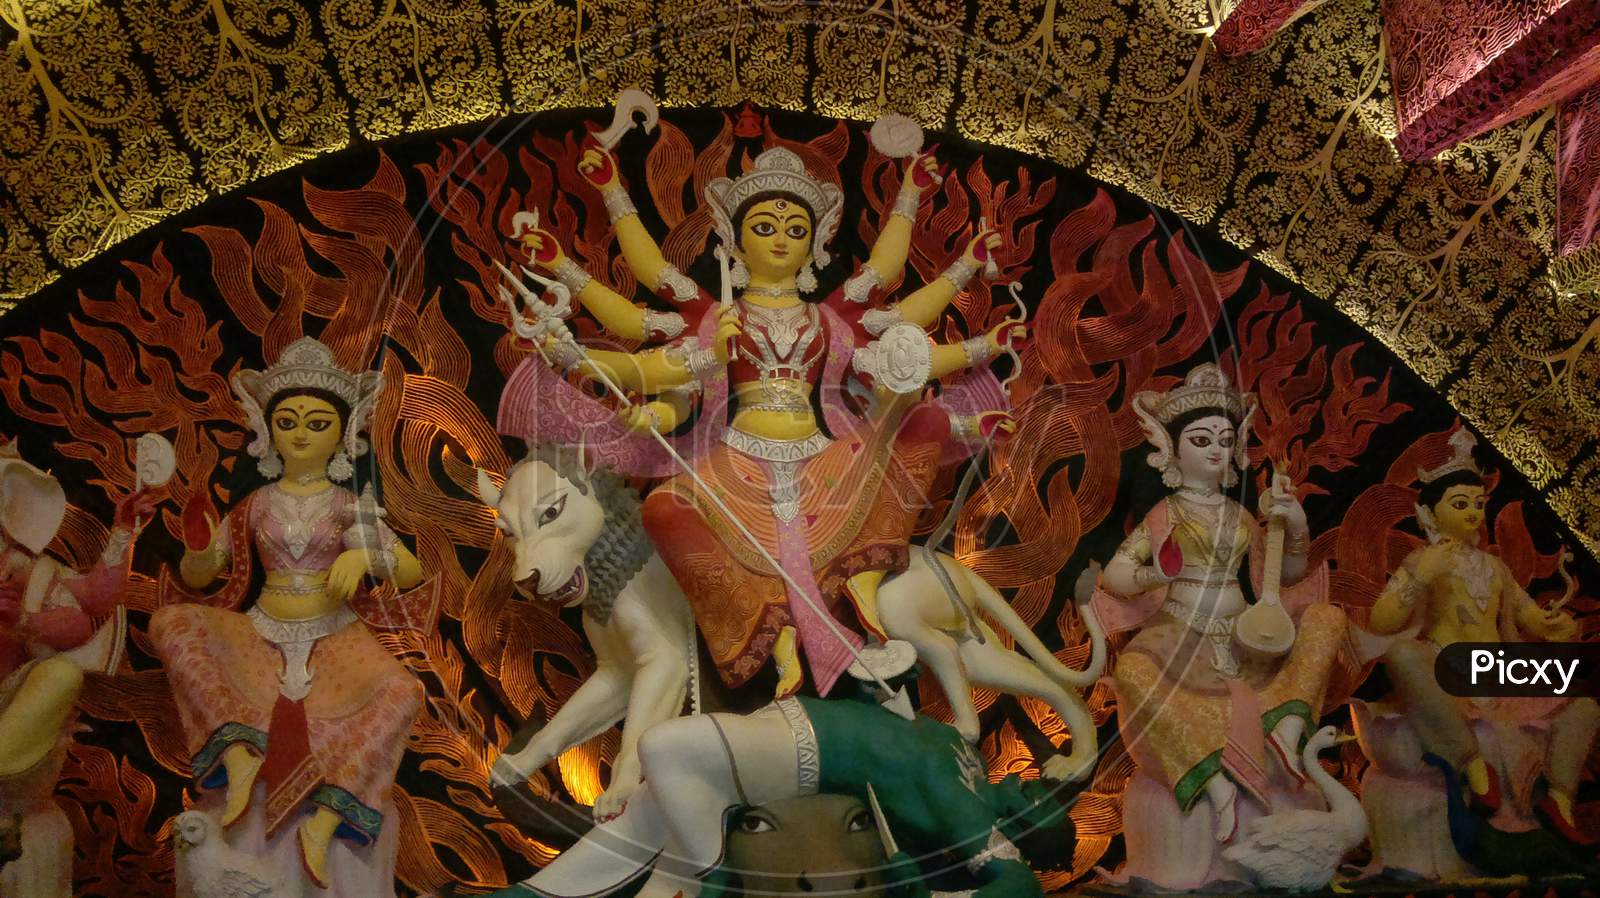 Greatest Festival of Bengal Durga puja